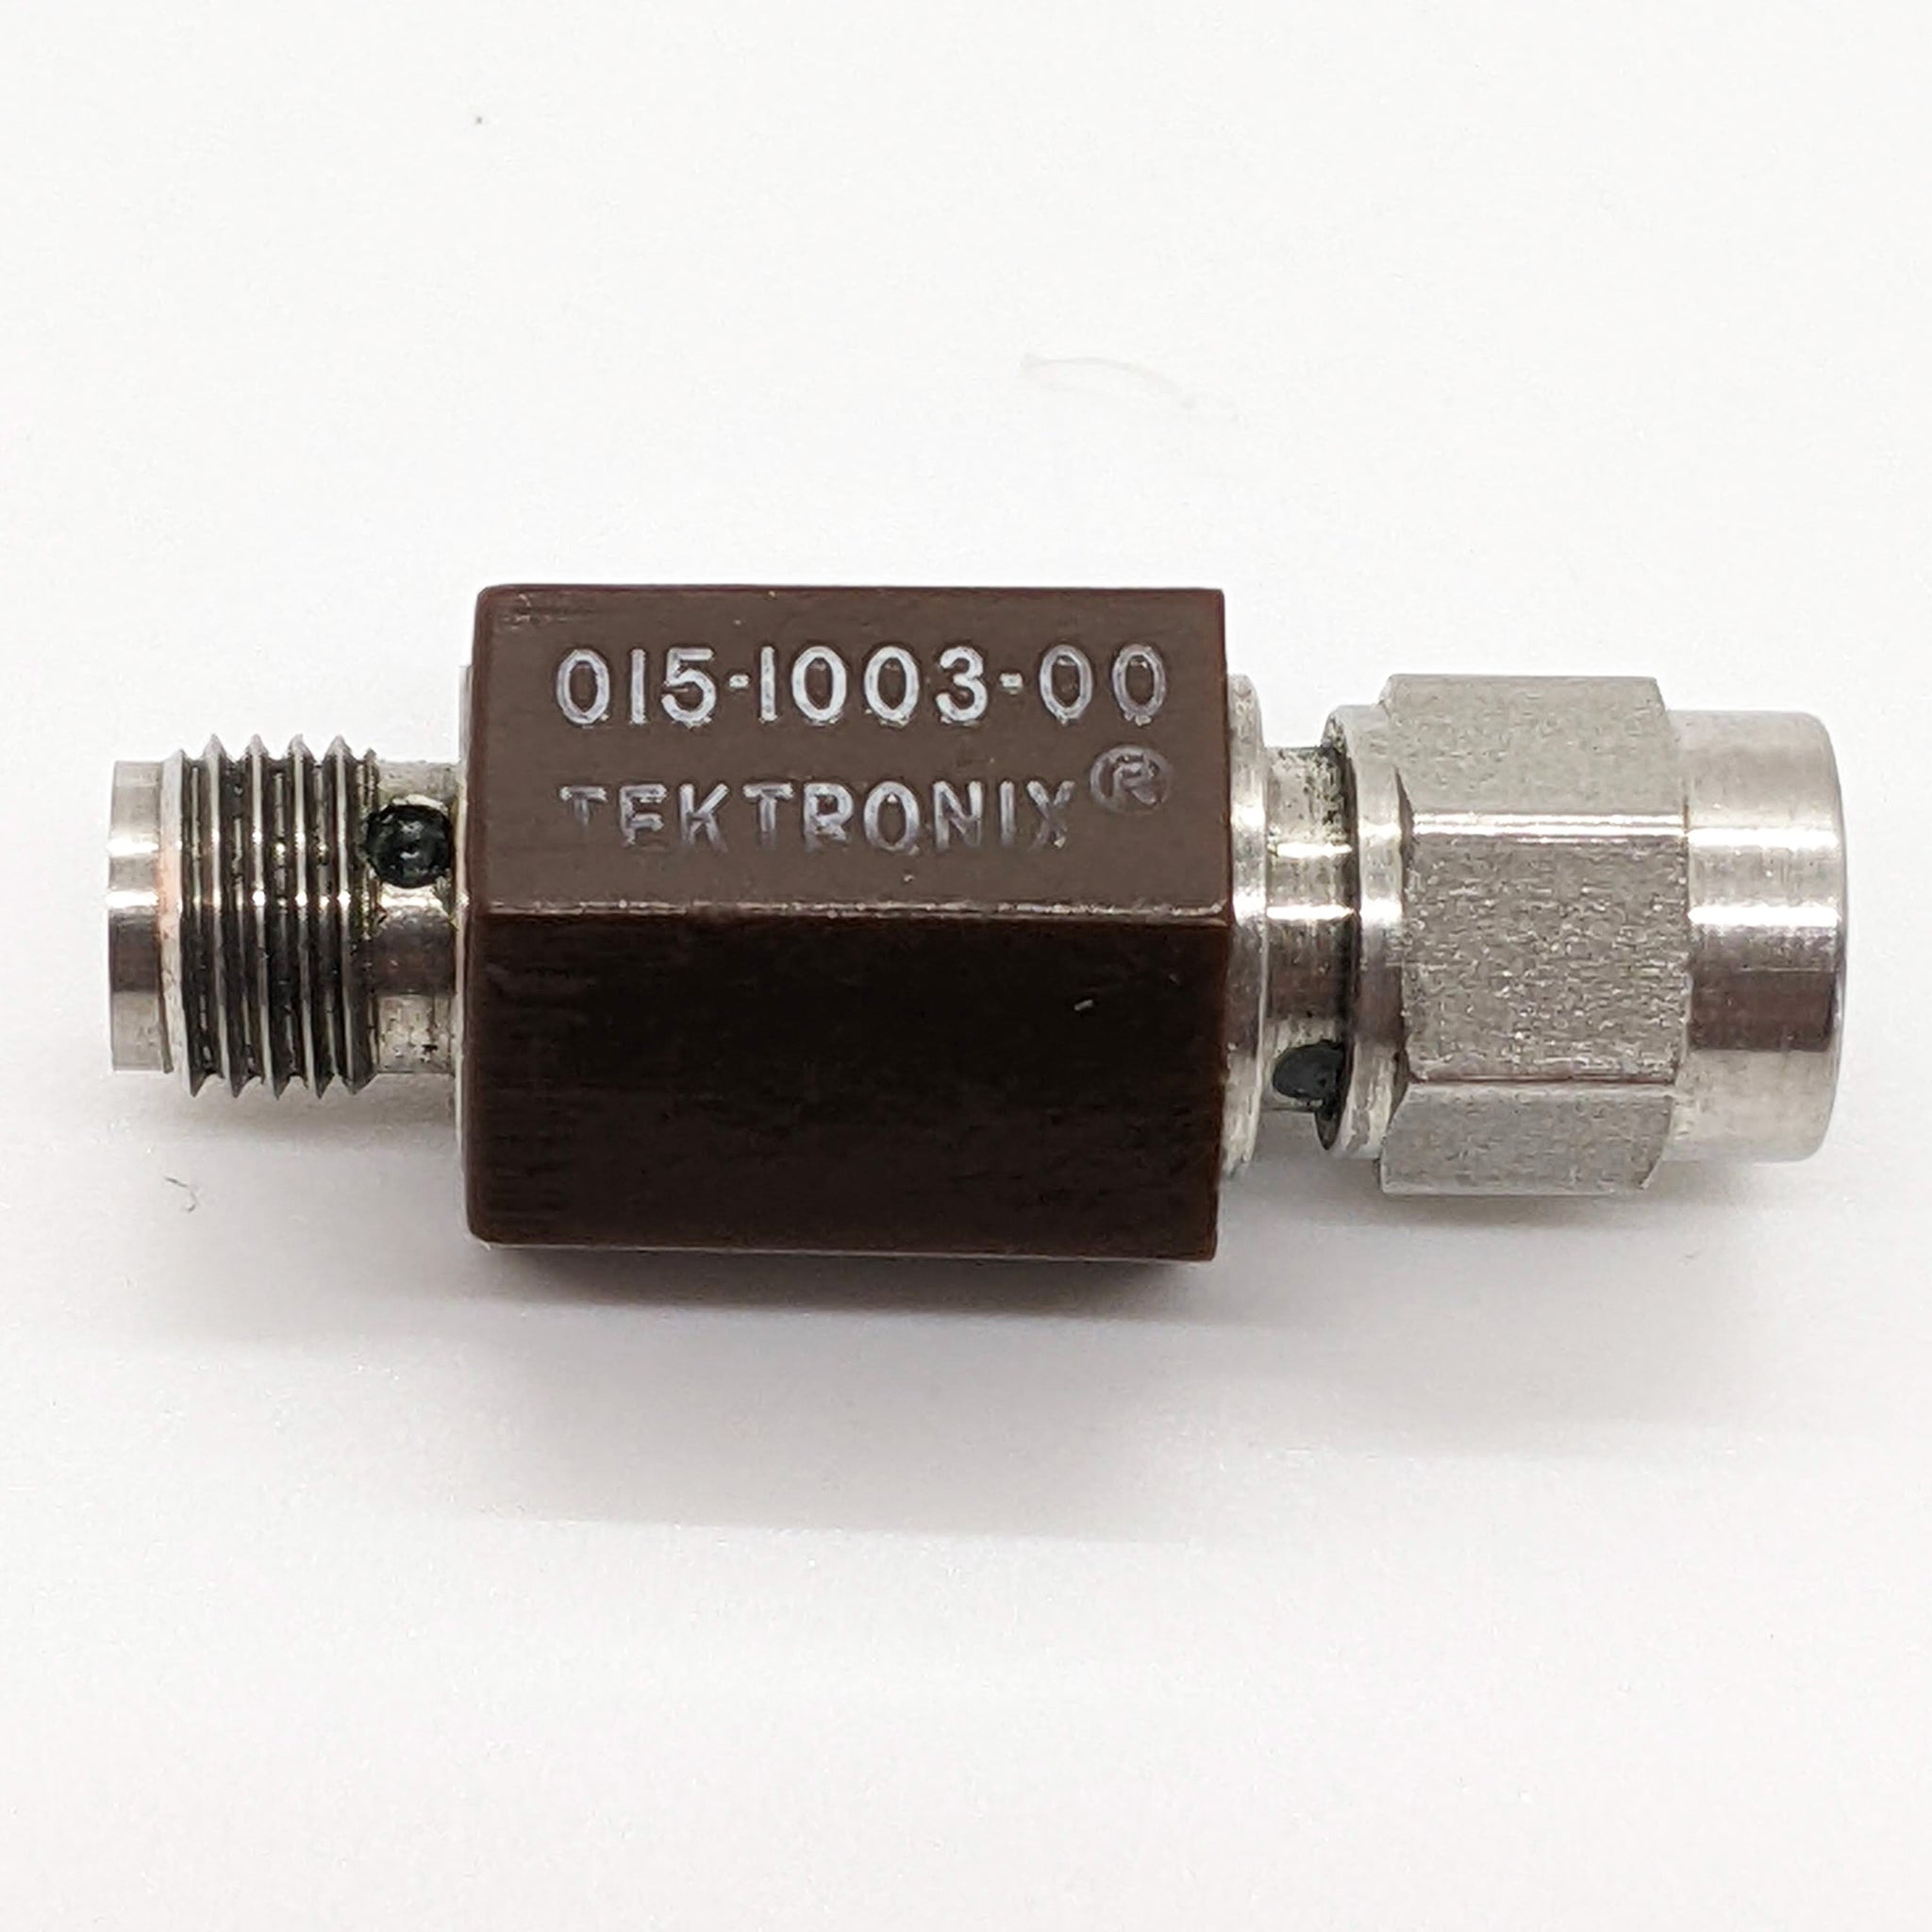 Tektronix 015-1003 Attenuator, SMA Connector, 50 Ohms